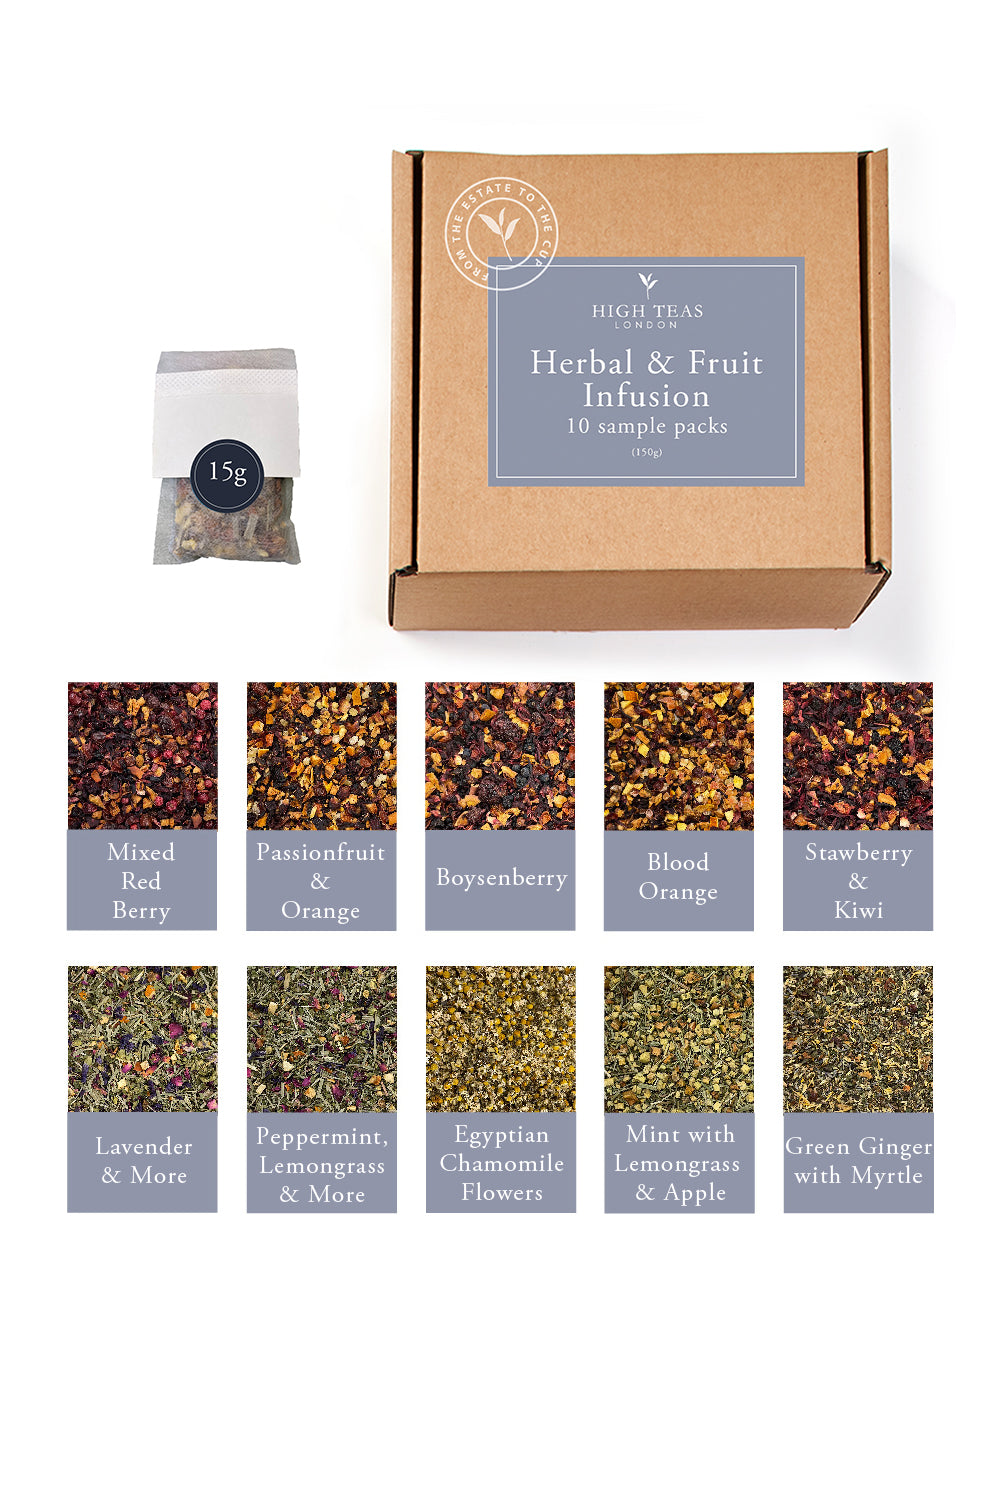 Herbal and Fruit Infusion Sample Box (10 x 15g)-Loose Leaf Tea-High Teas